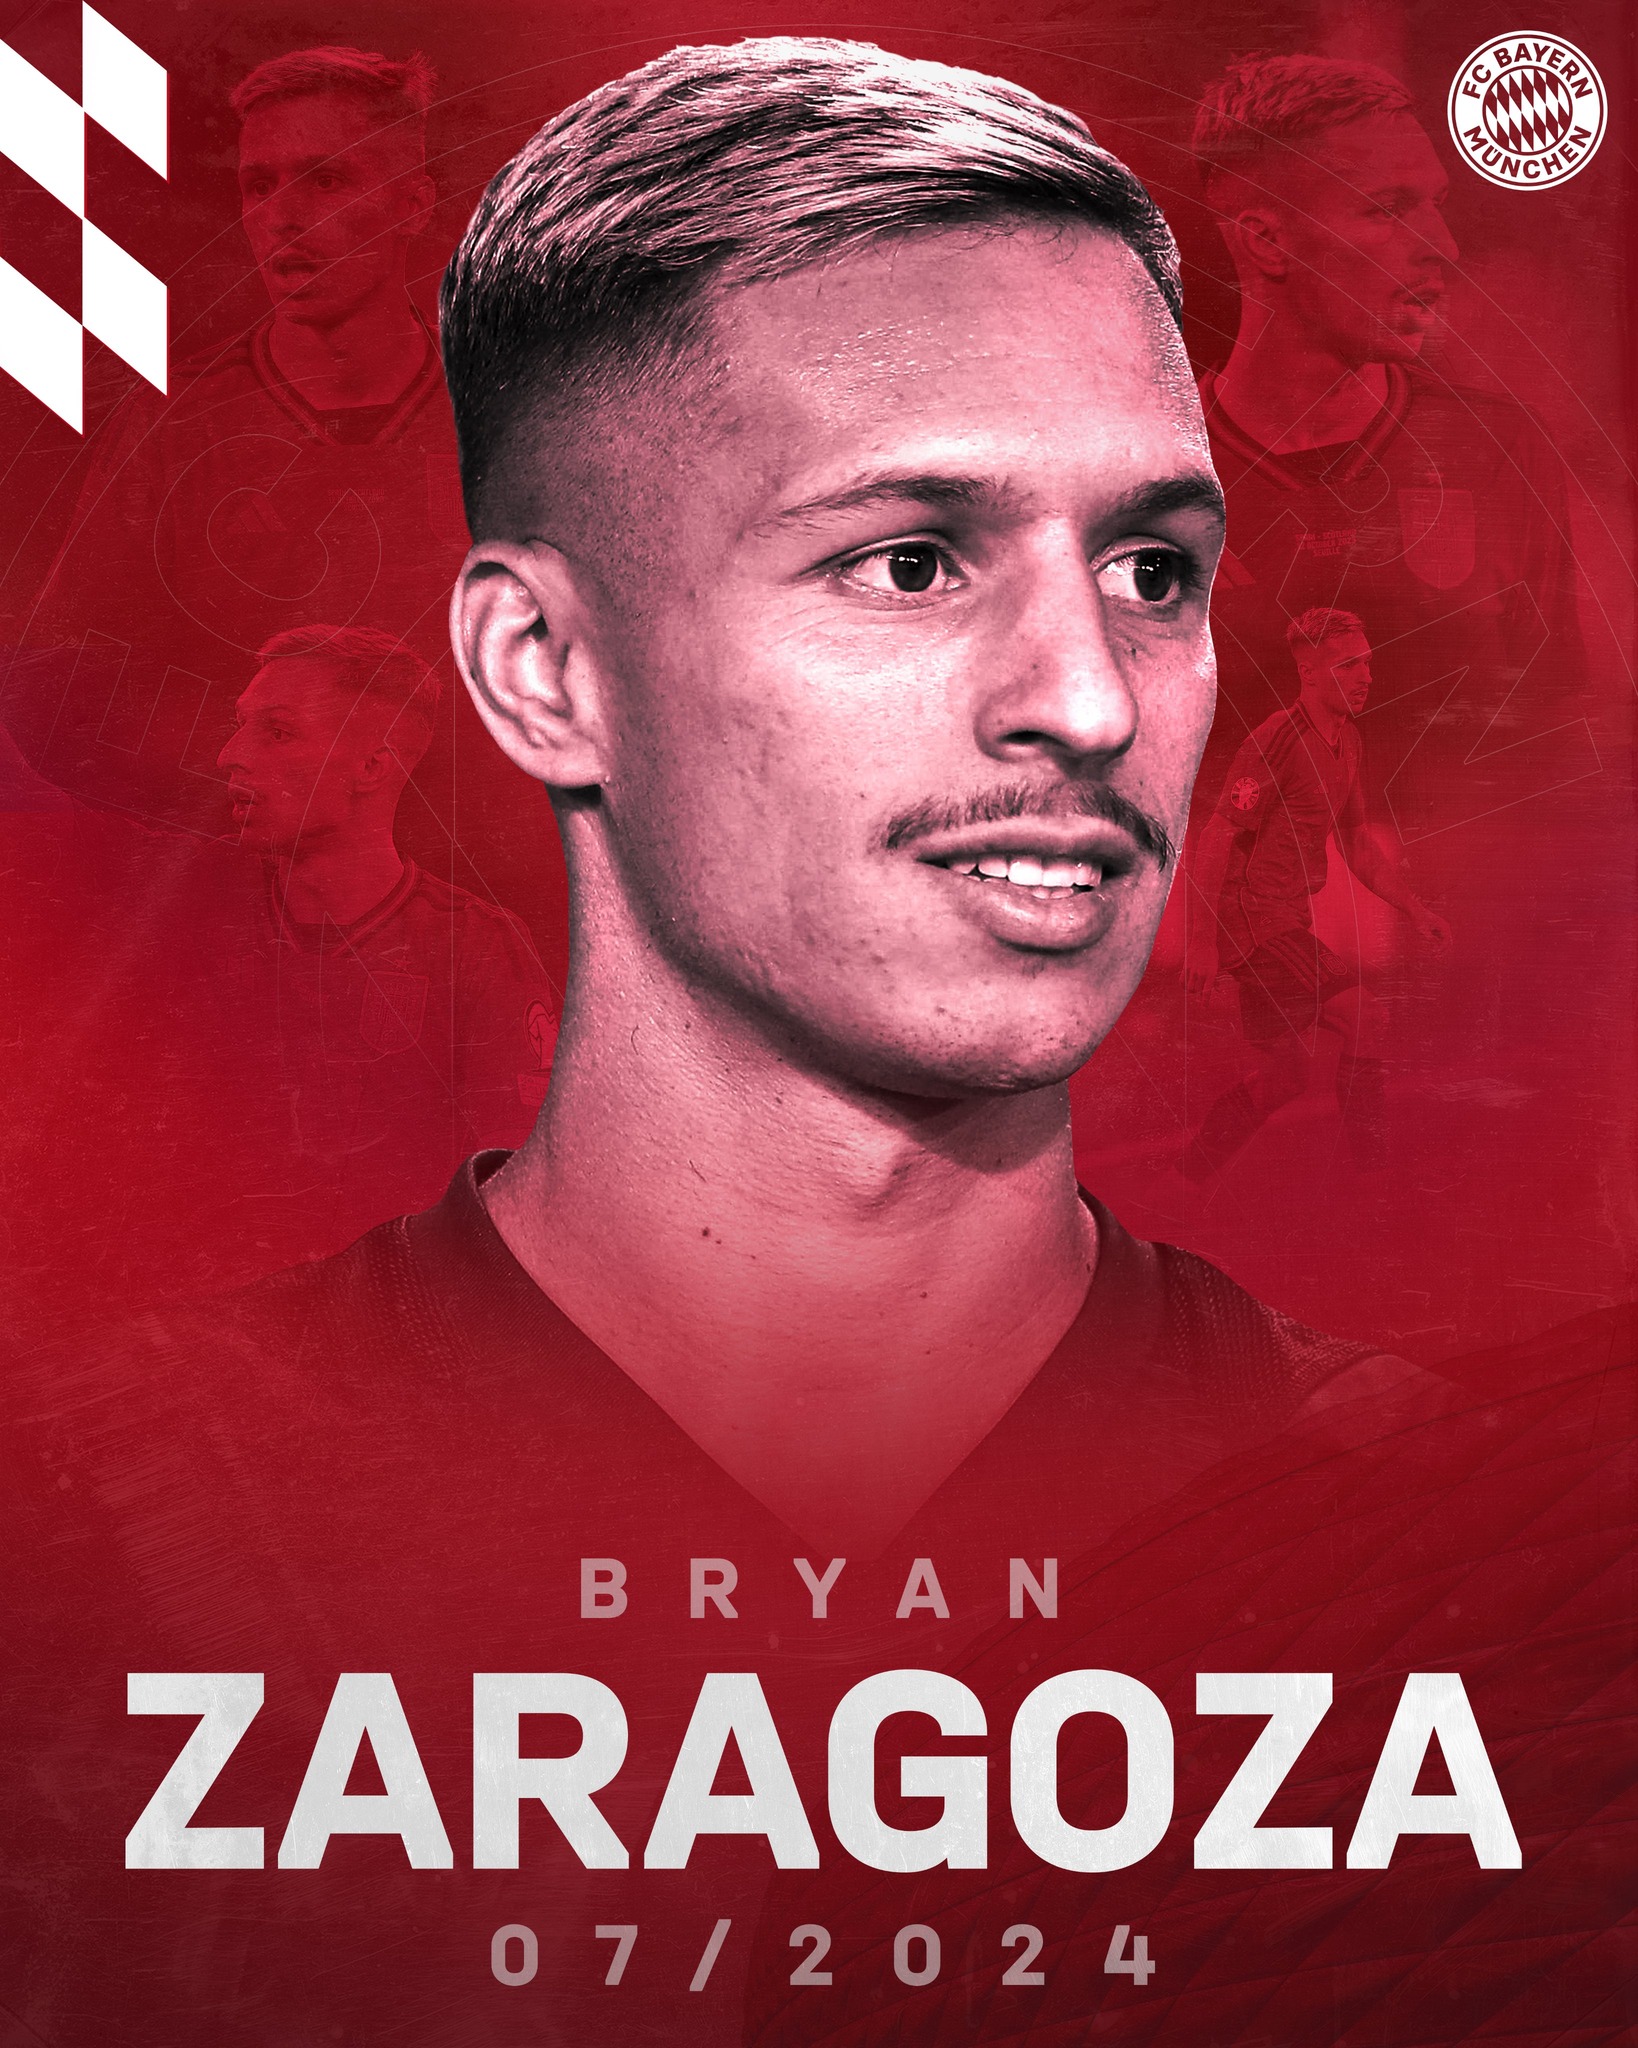 Bryan Zaragoza